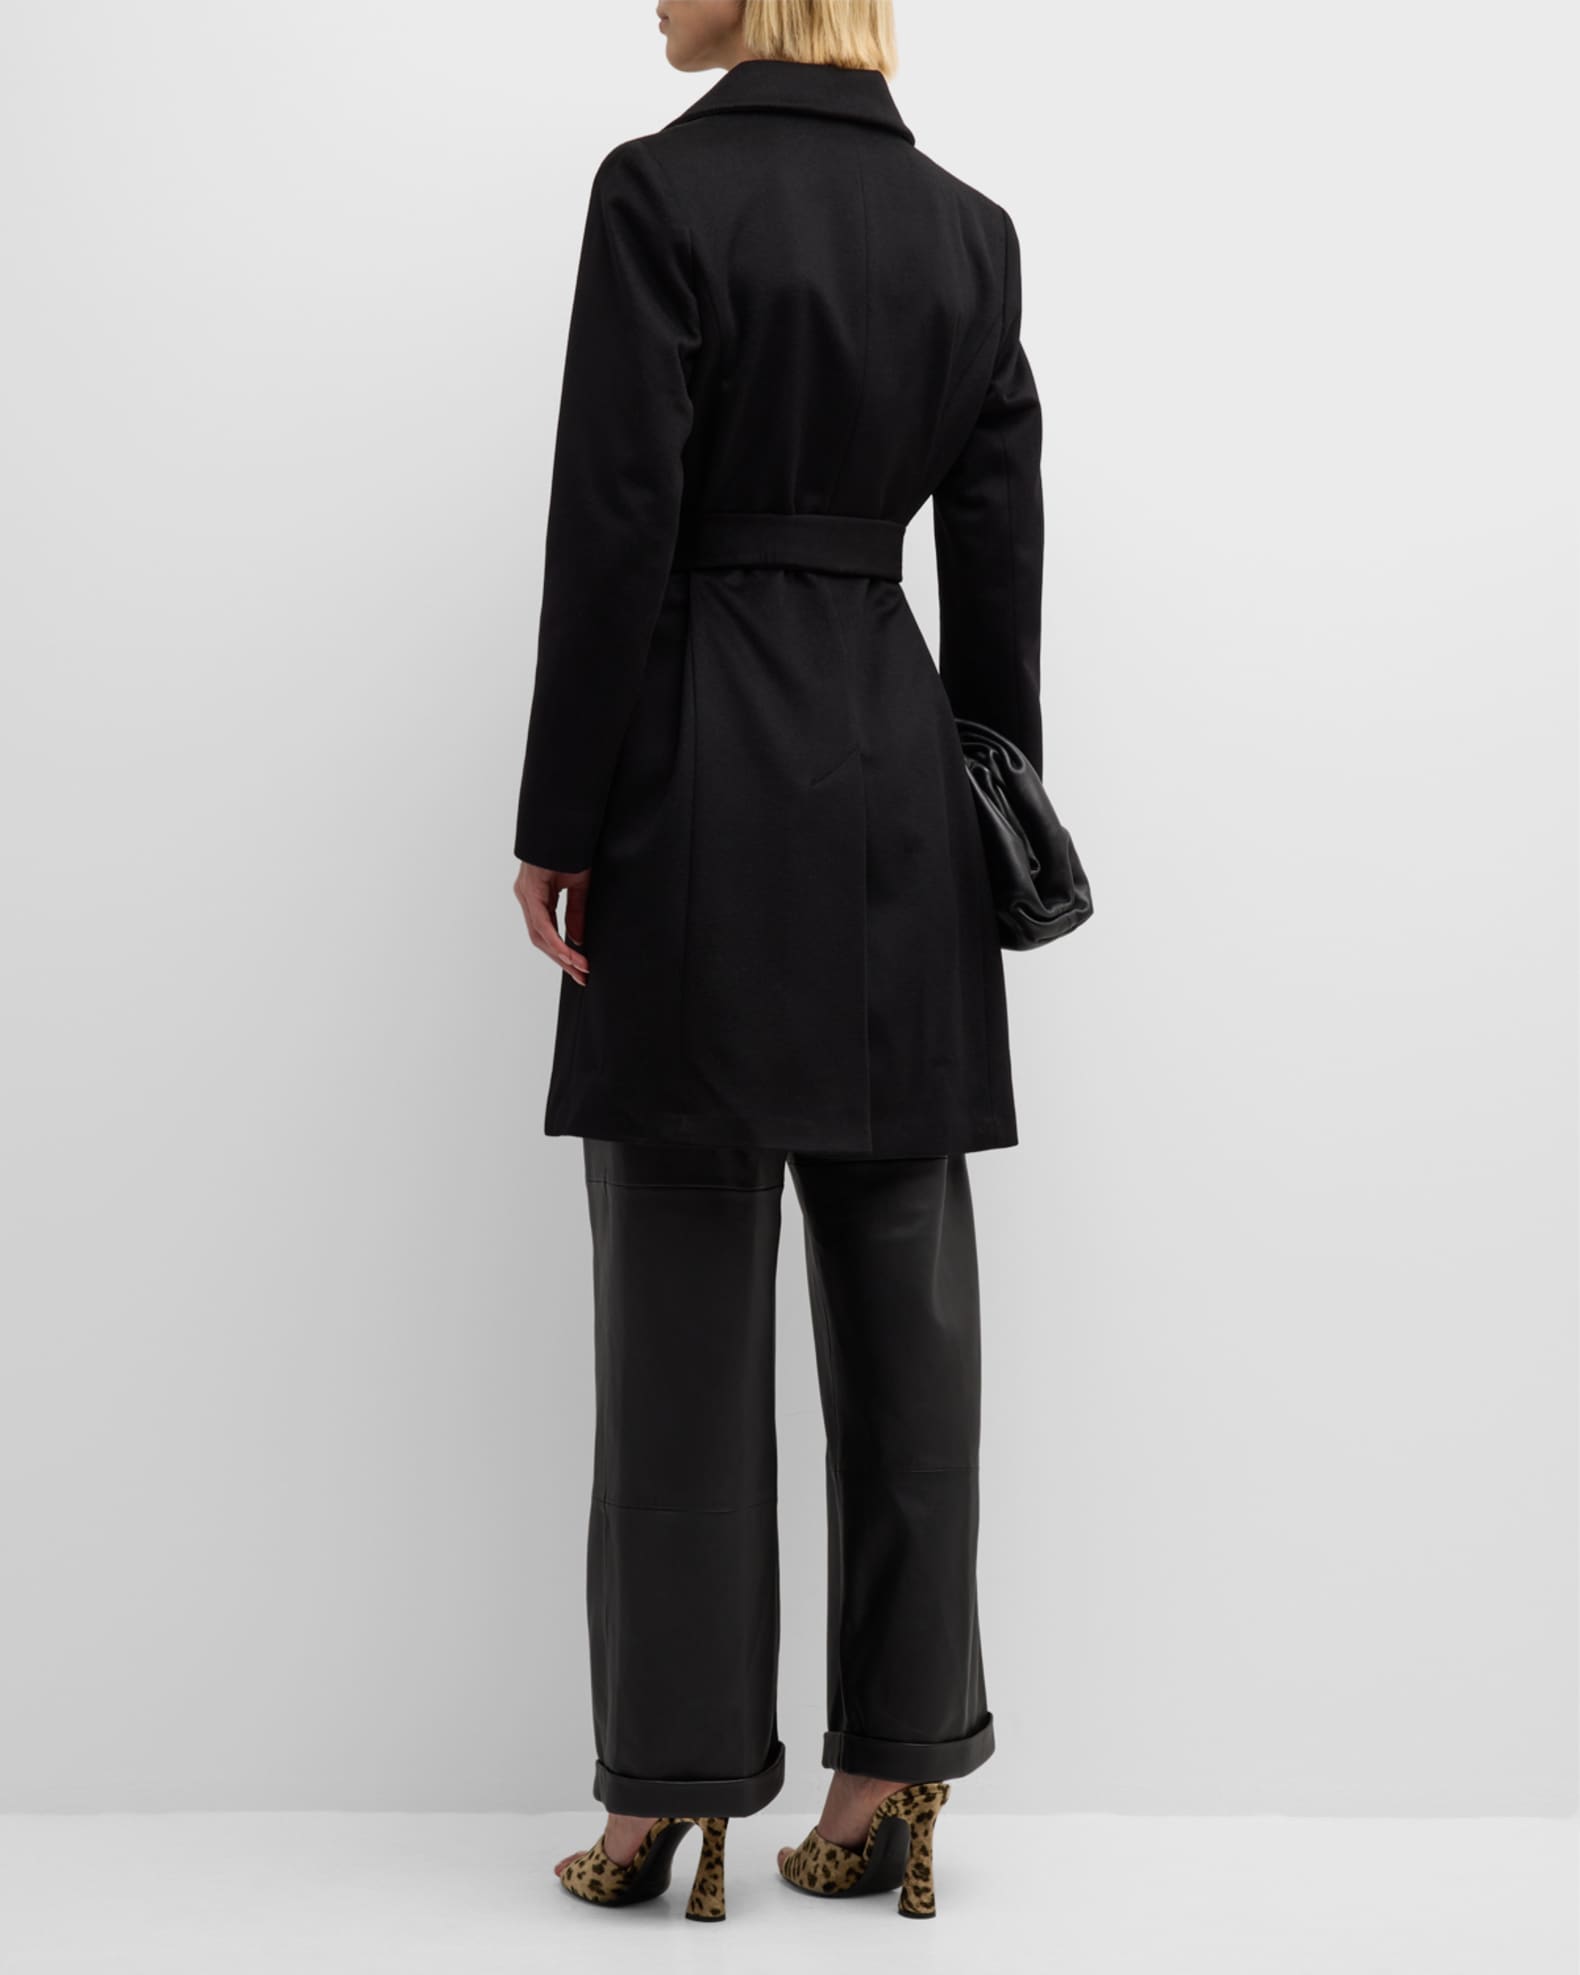 Louis Vuitton Mens Sneaker Shoe Embossed Leather 2009 Season Black/White  Sz. 7 - Ellis Antiques